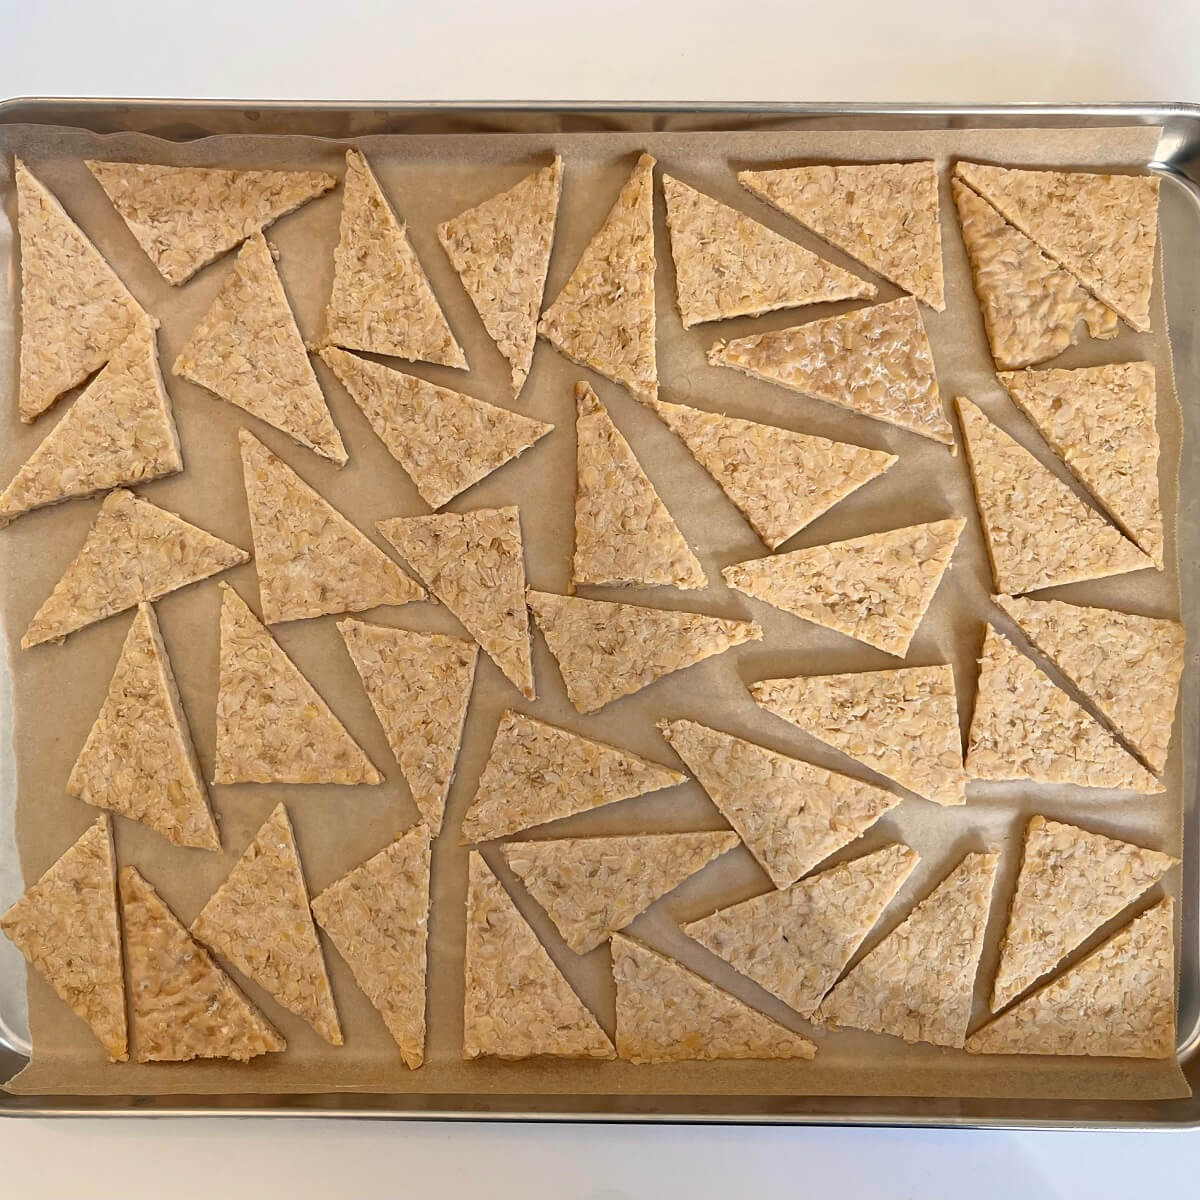 Raw tempeh pieces on a sheet pan.